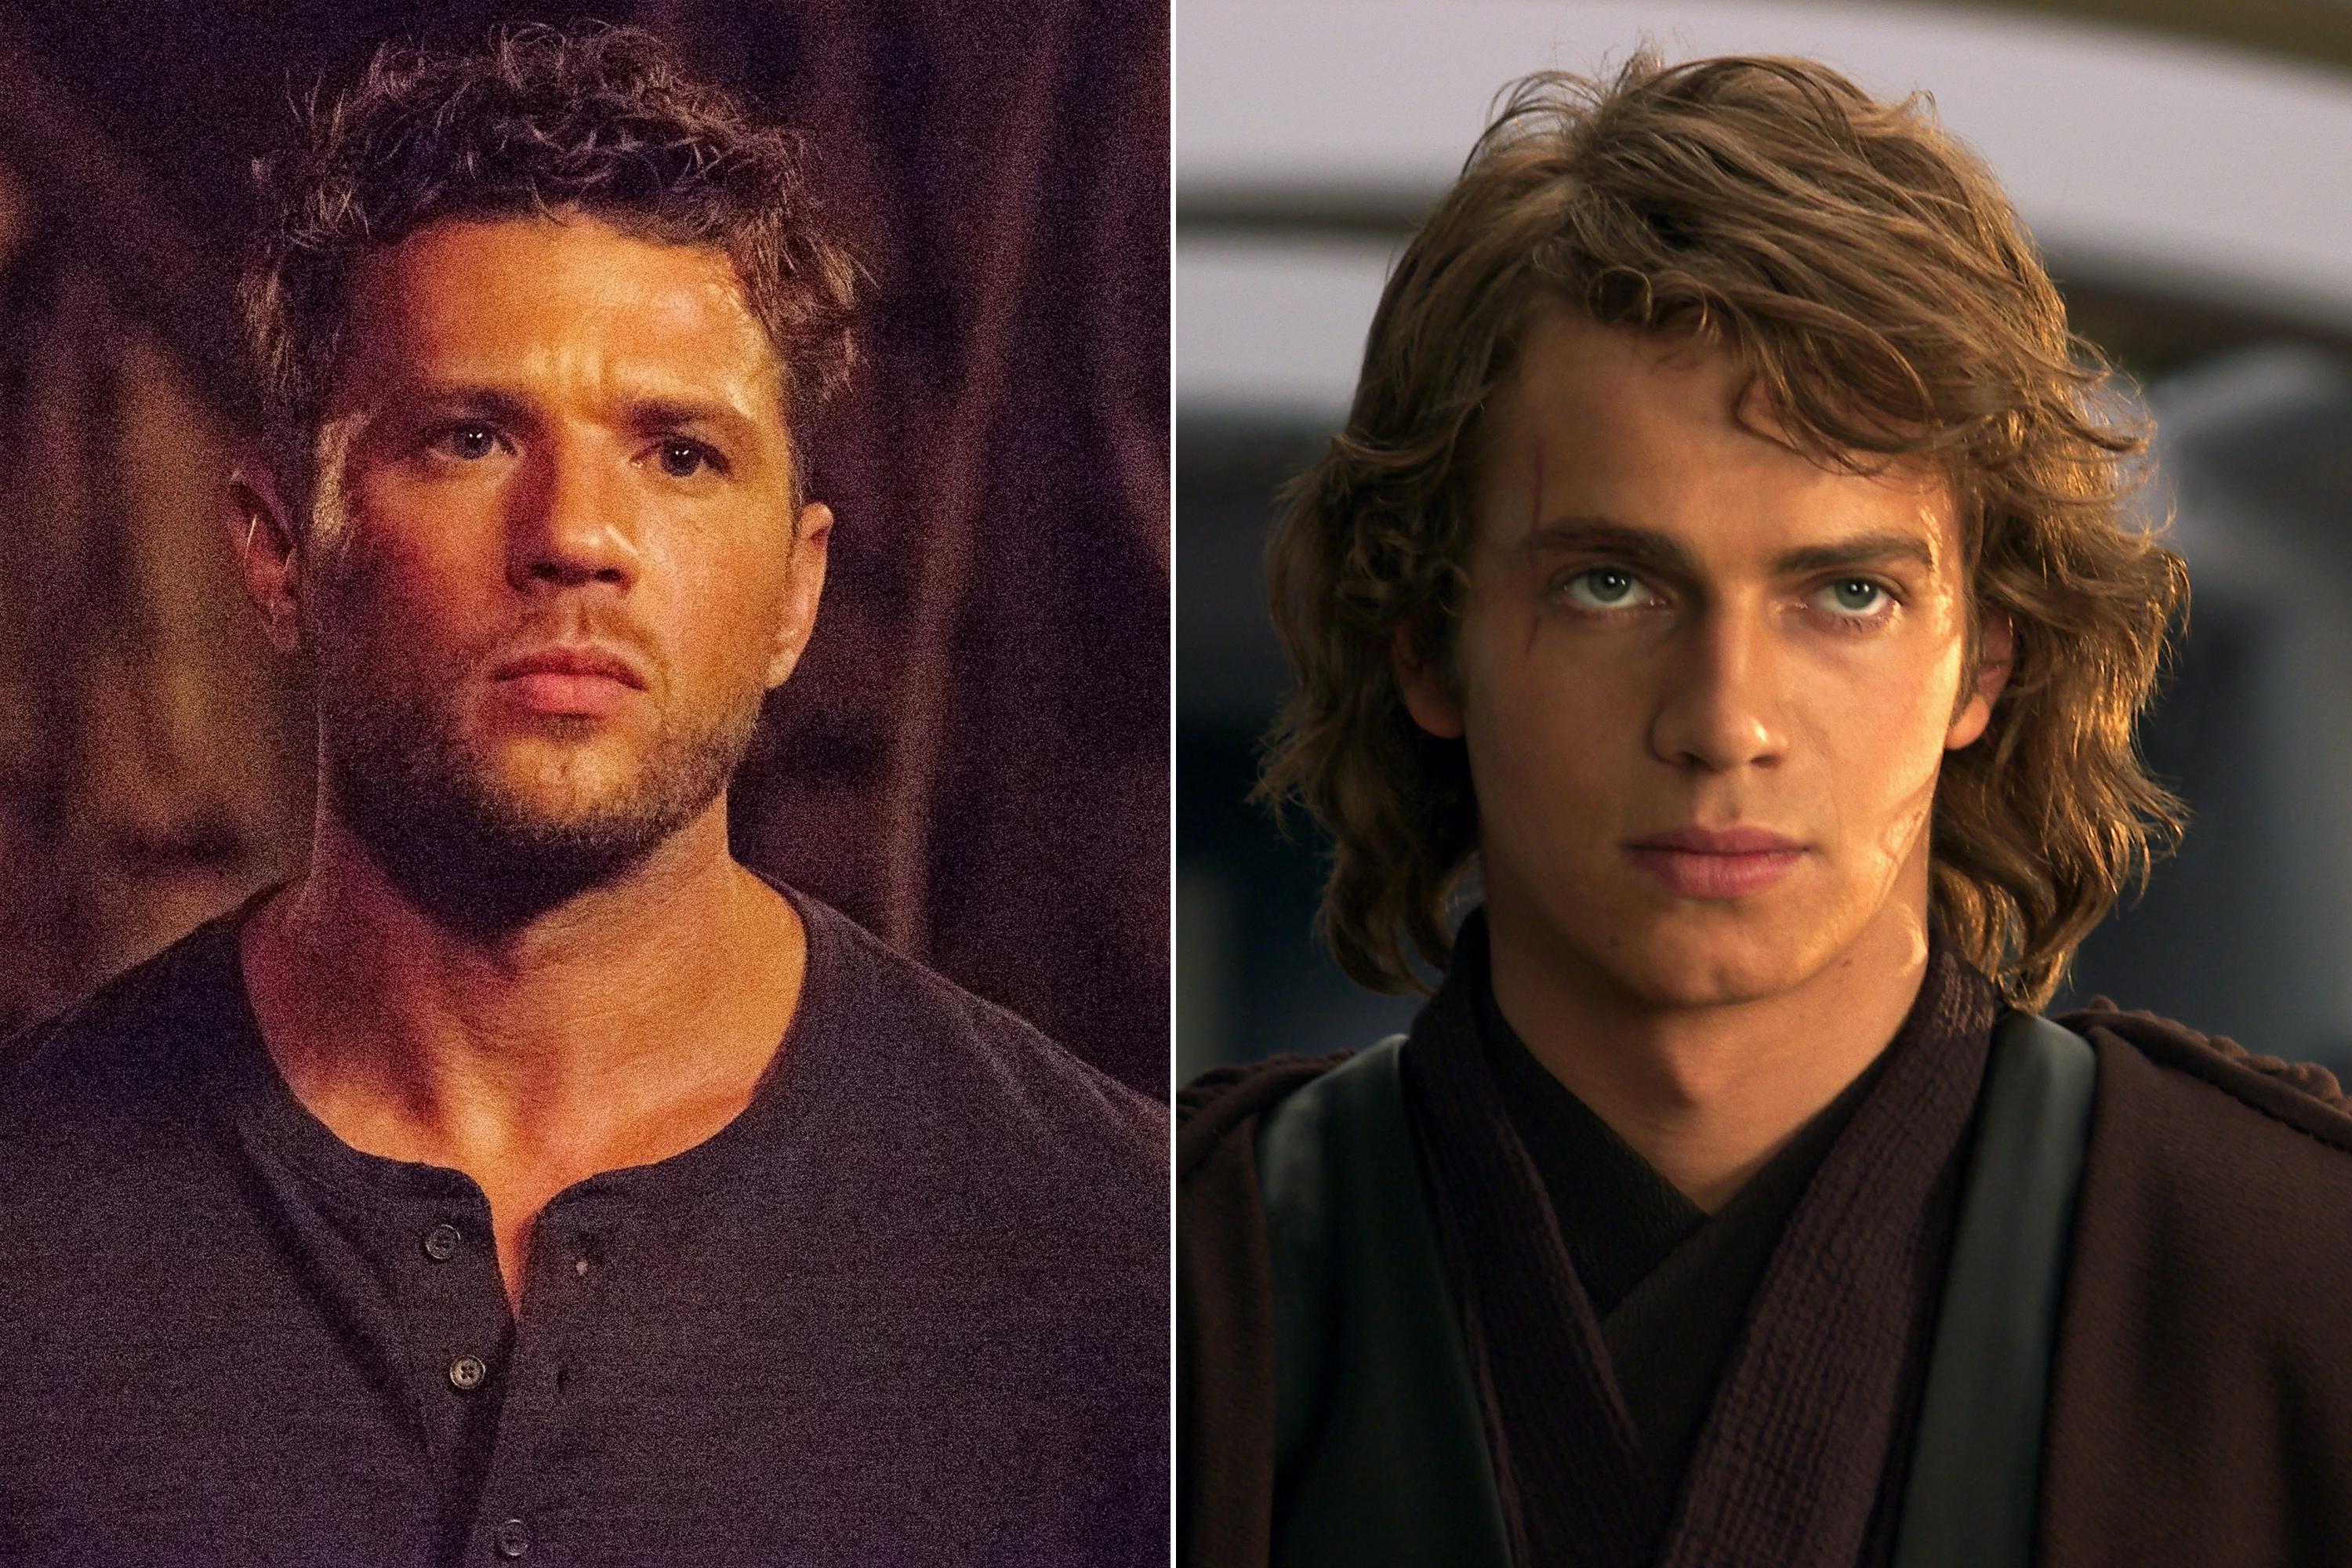 Ryan Phillippe was almost cast as Anakin Skywalker in Star Wars